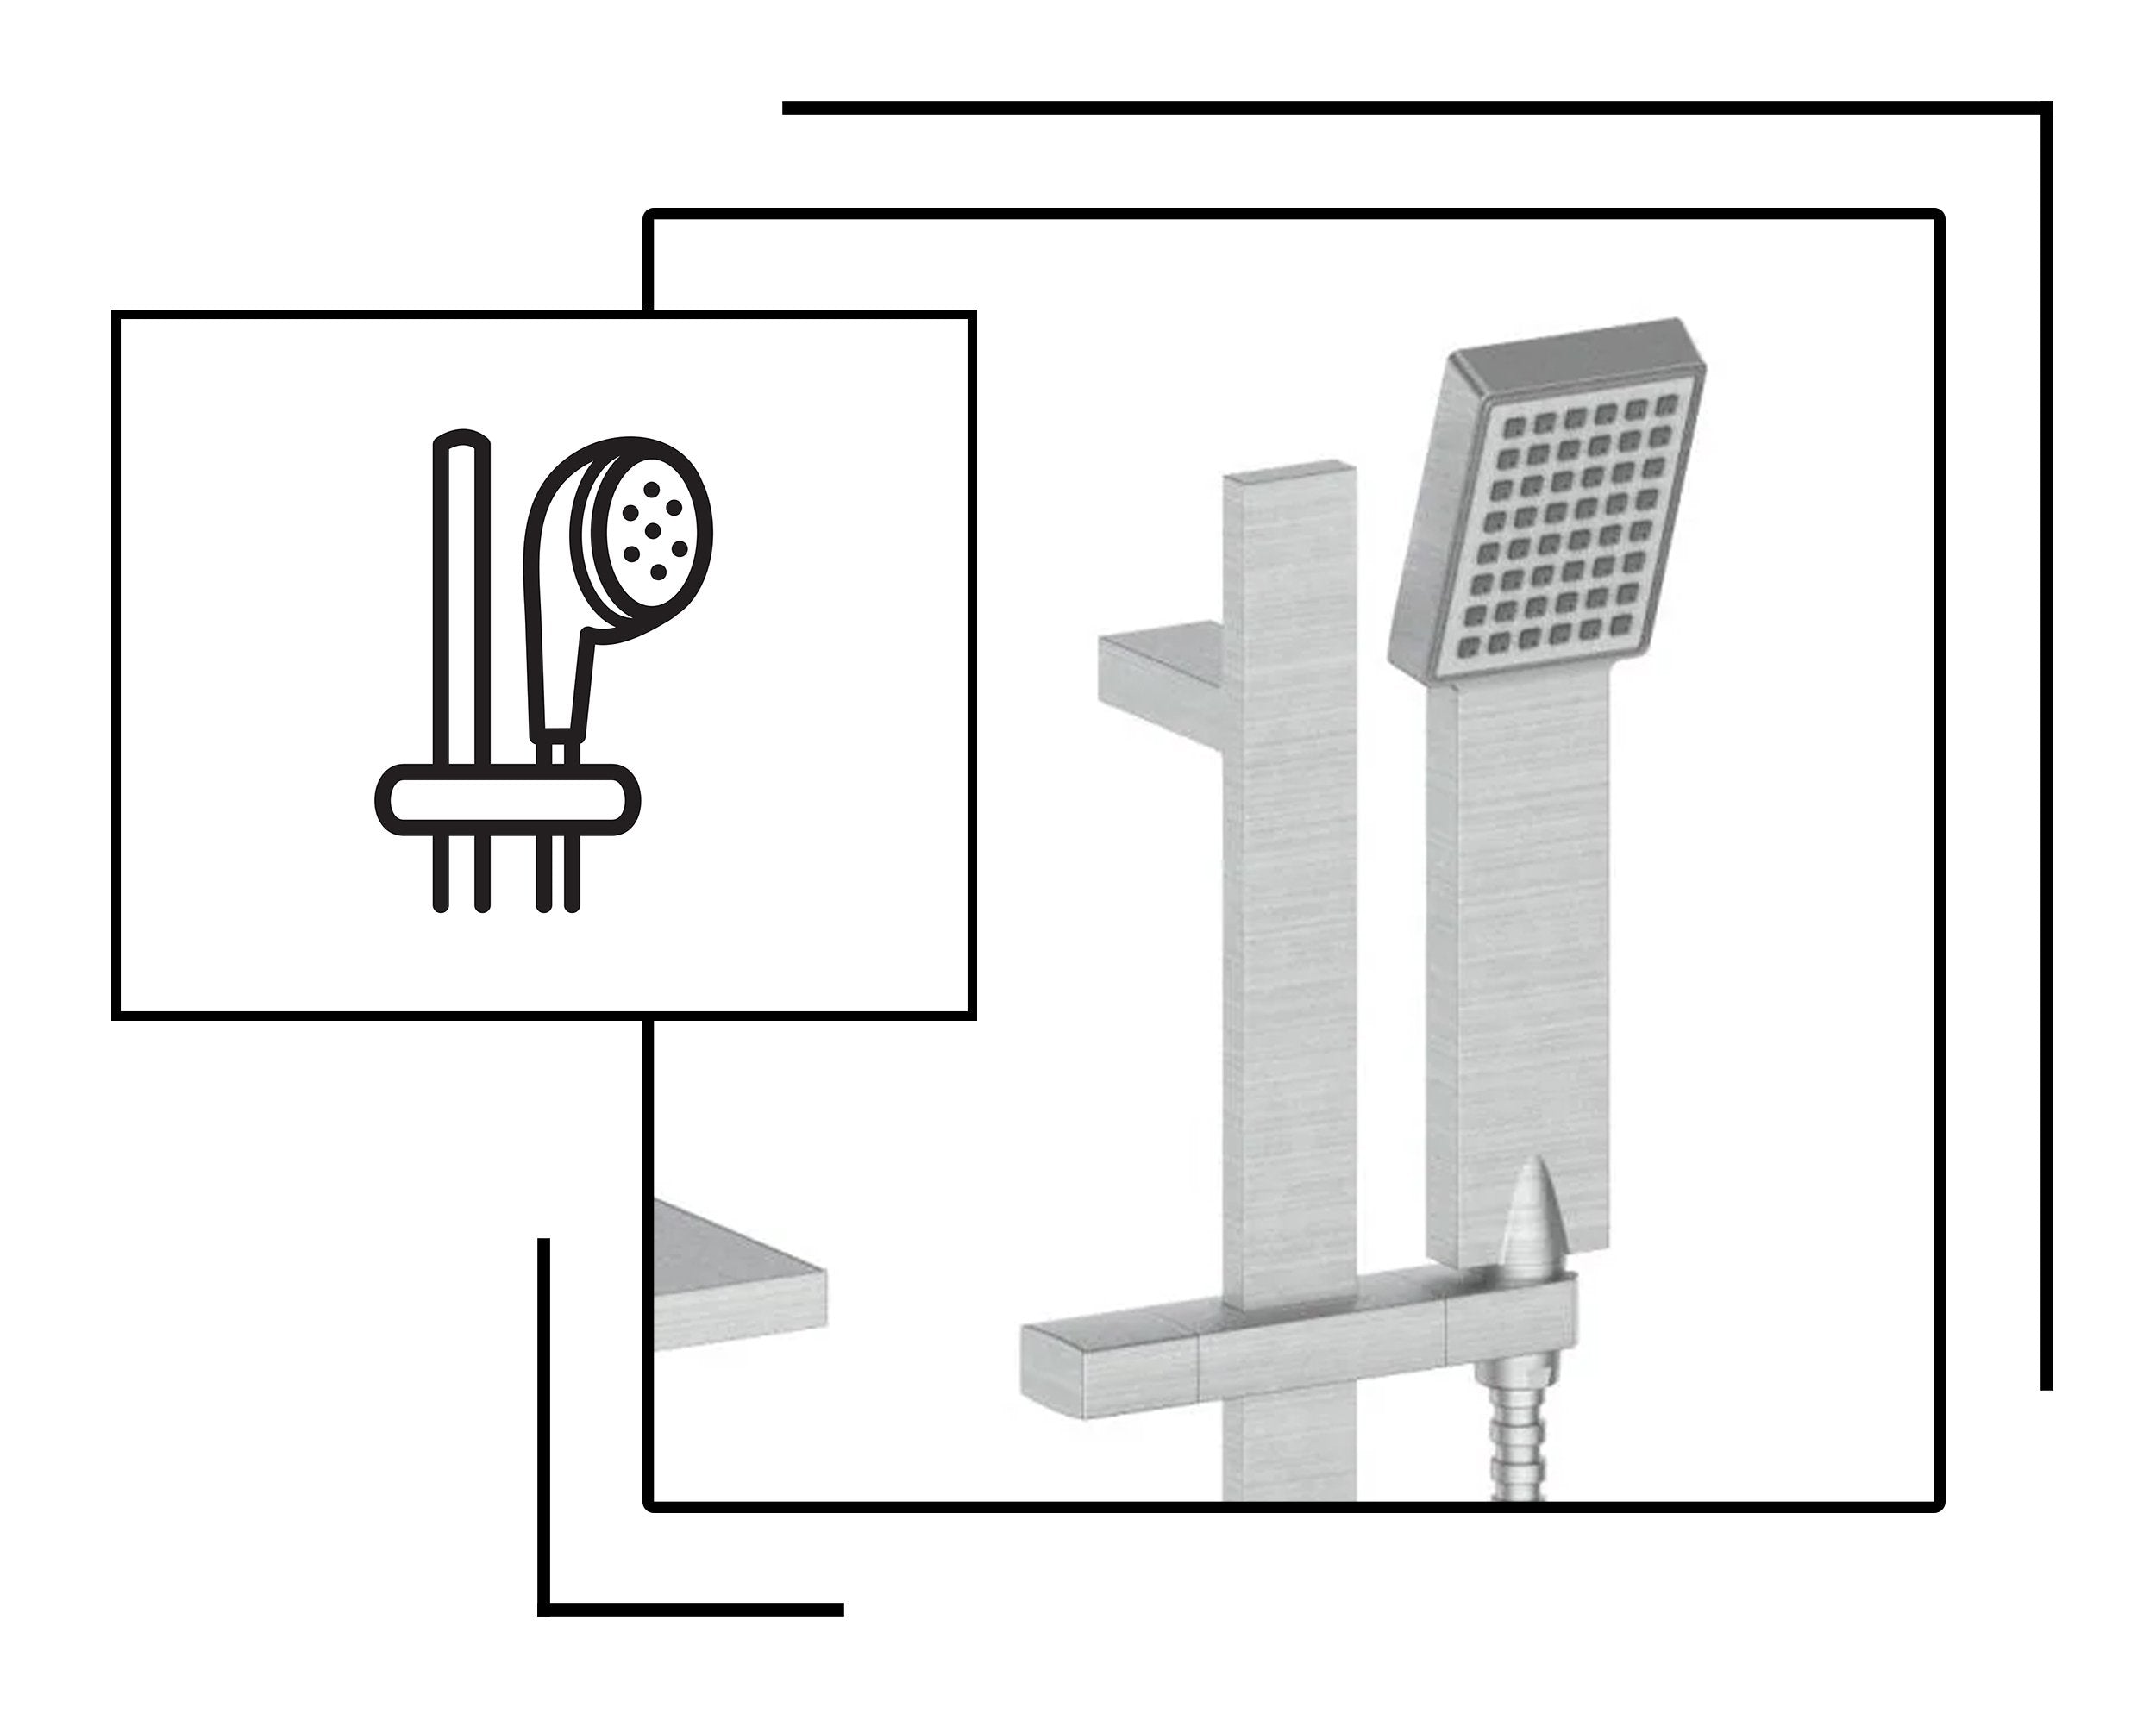 Icon and image representing ergonomic control